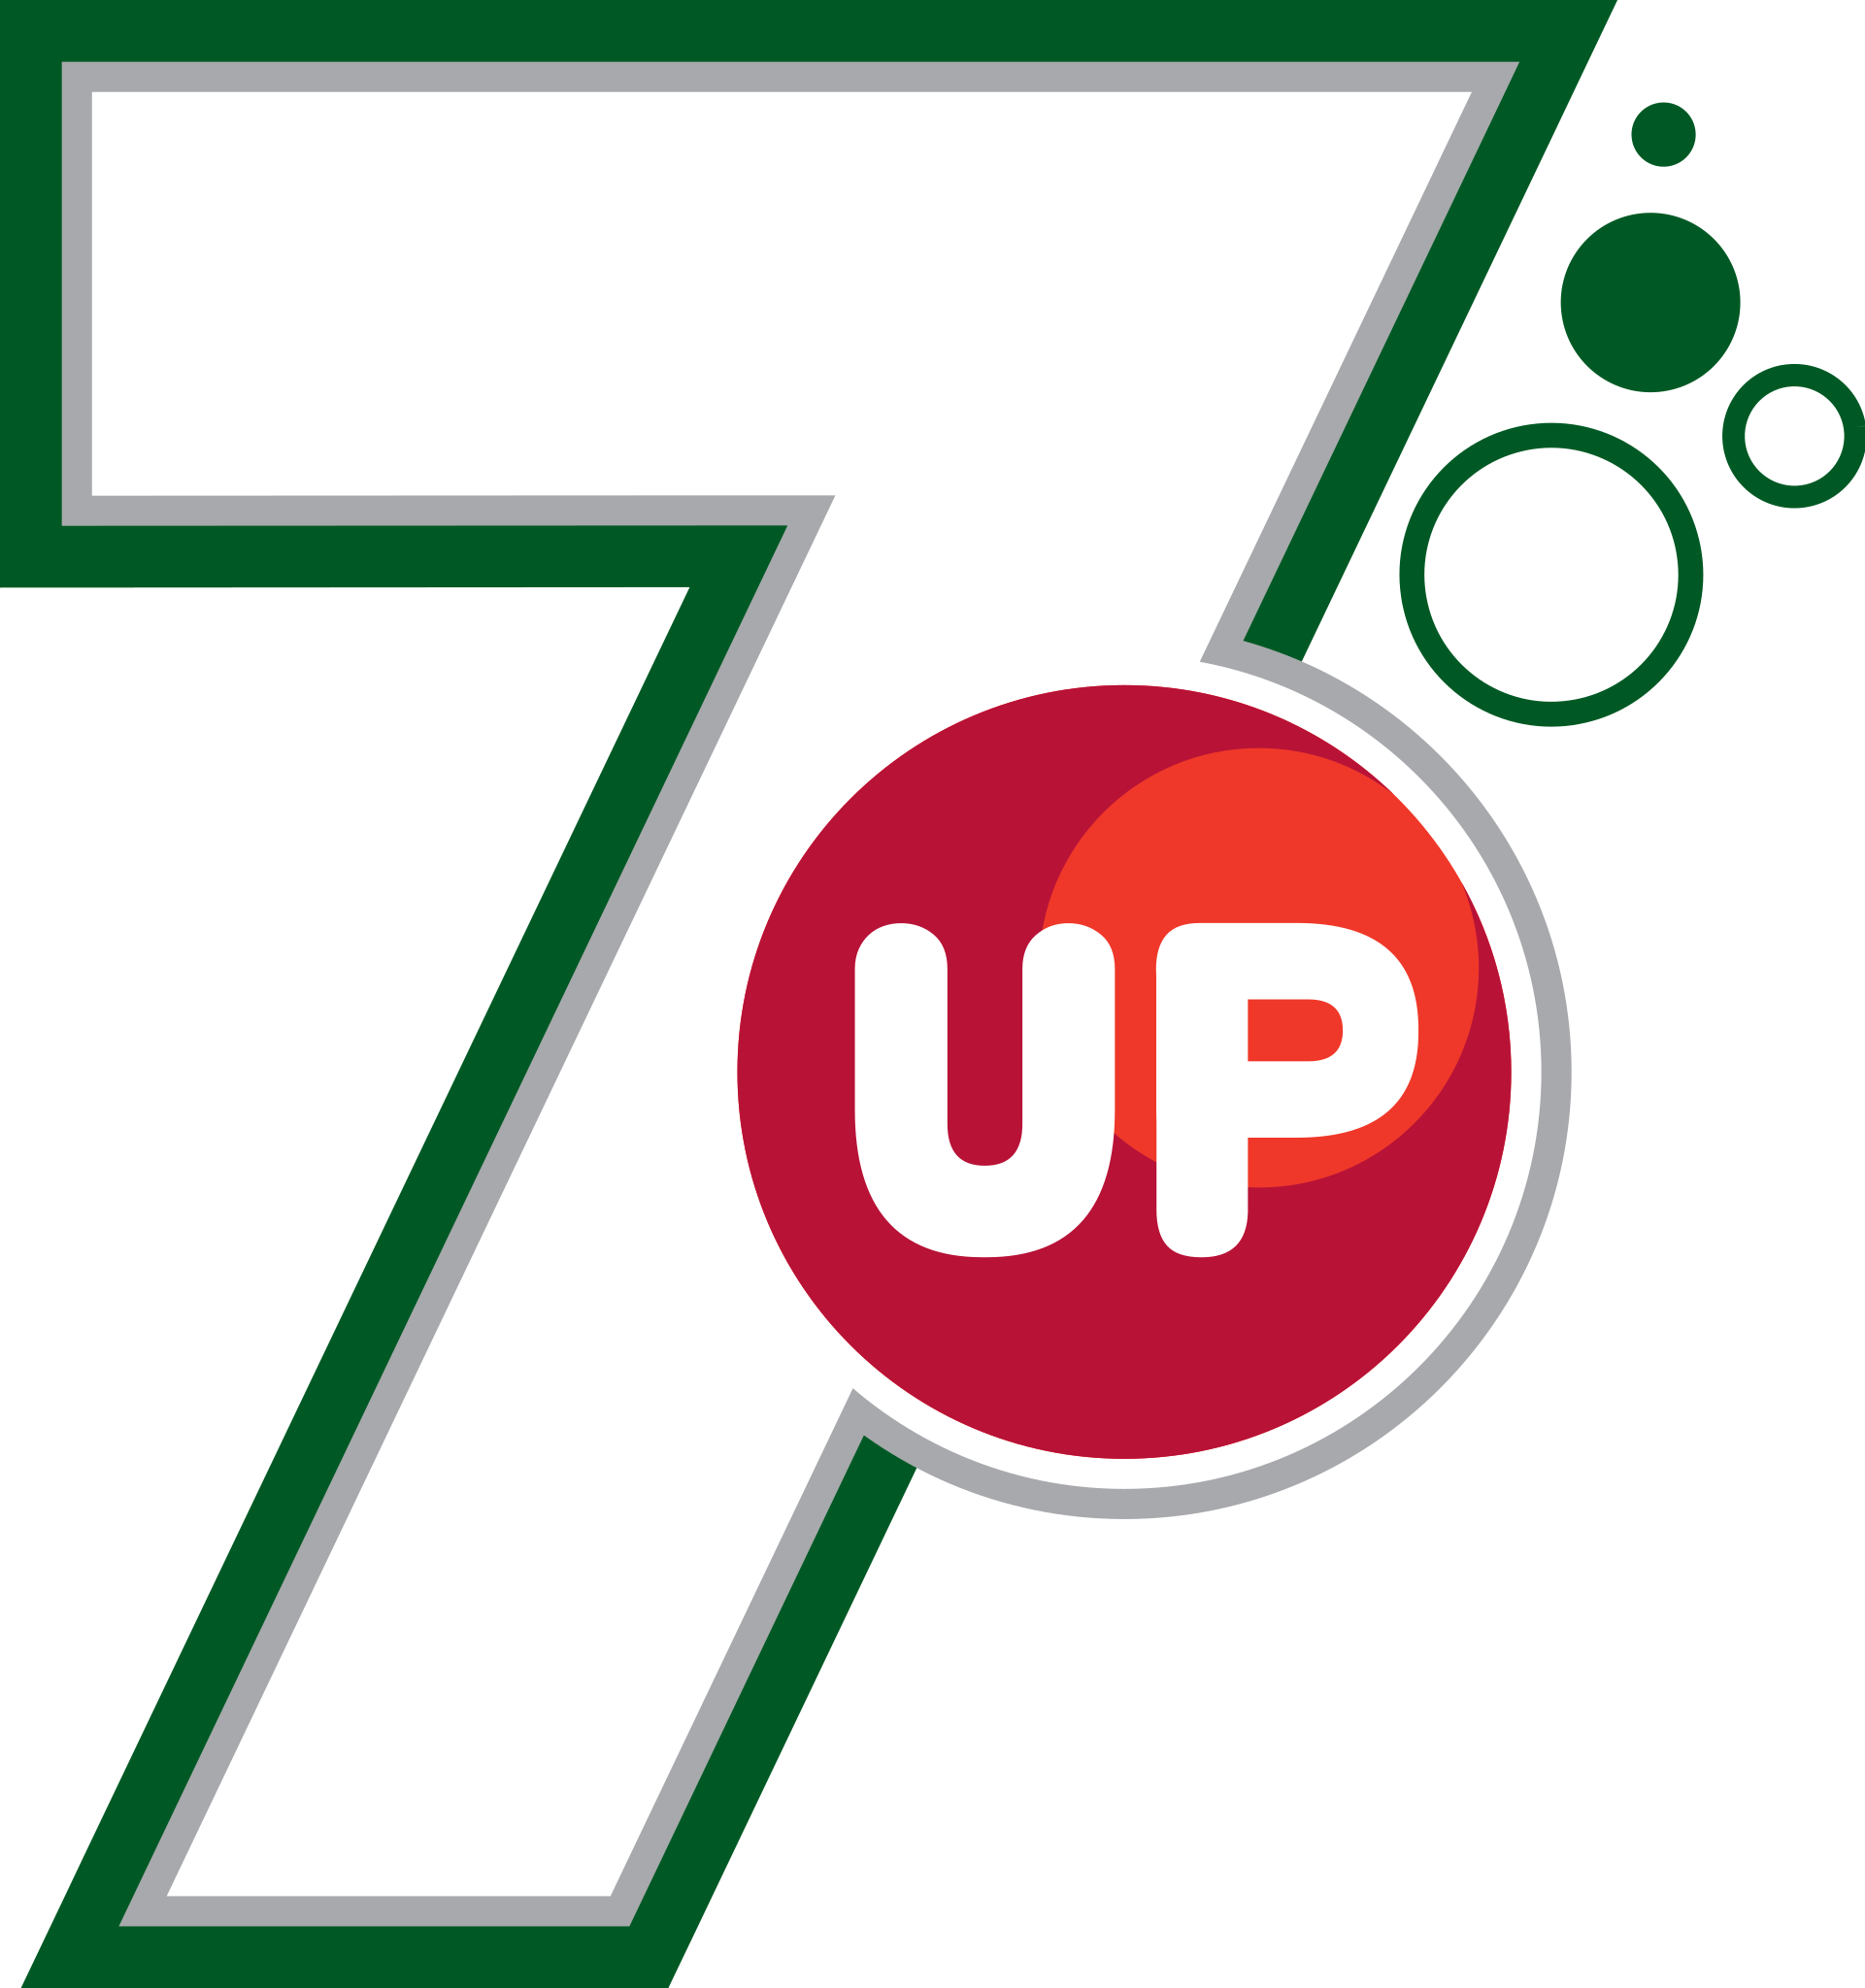 7 Up - Wikidata